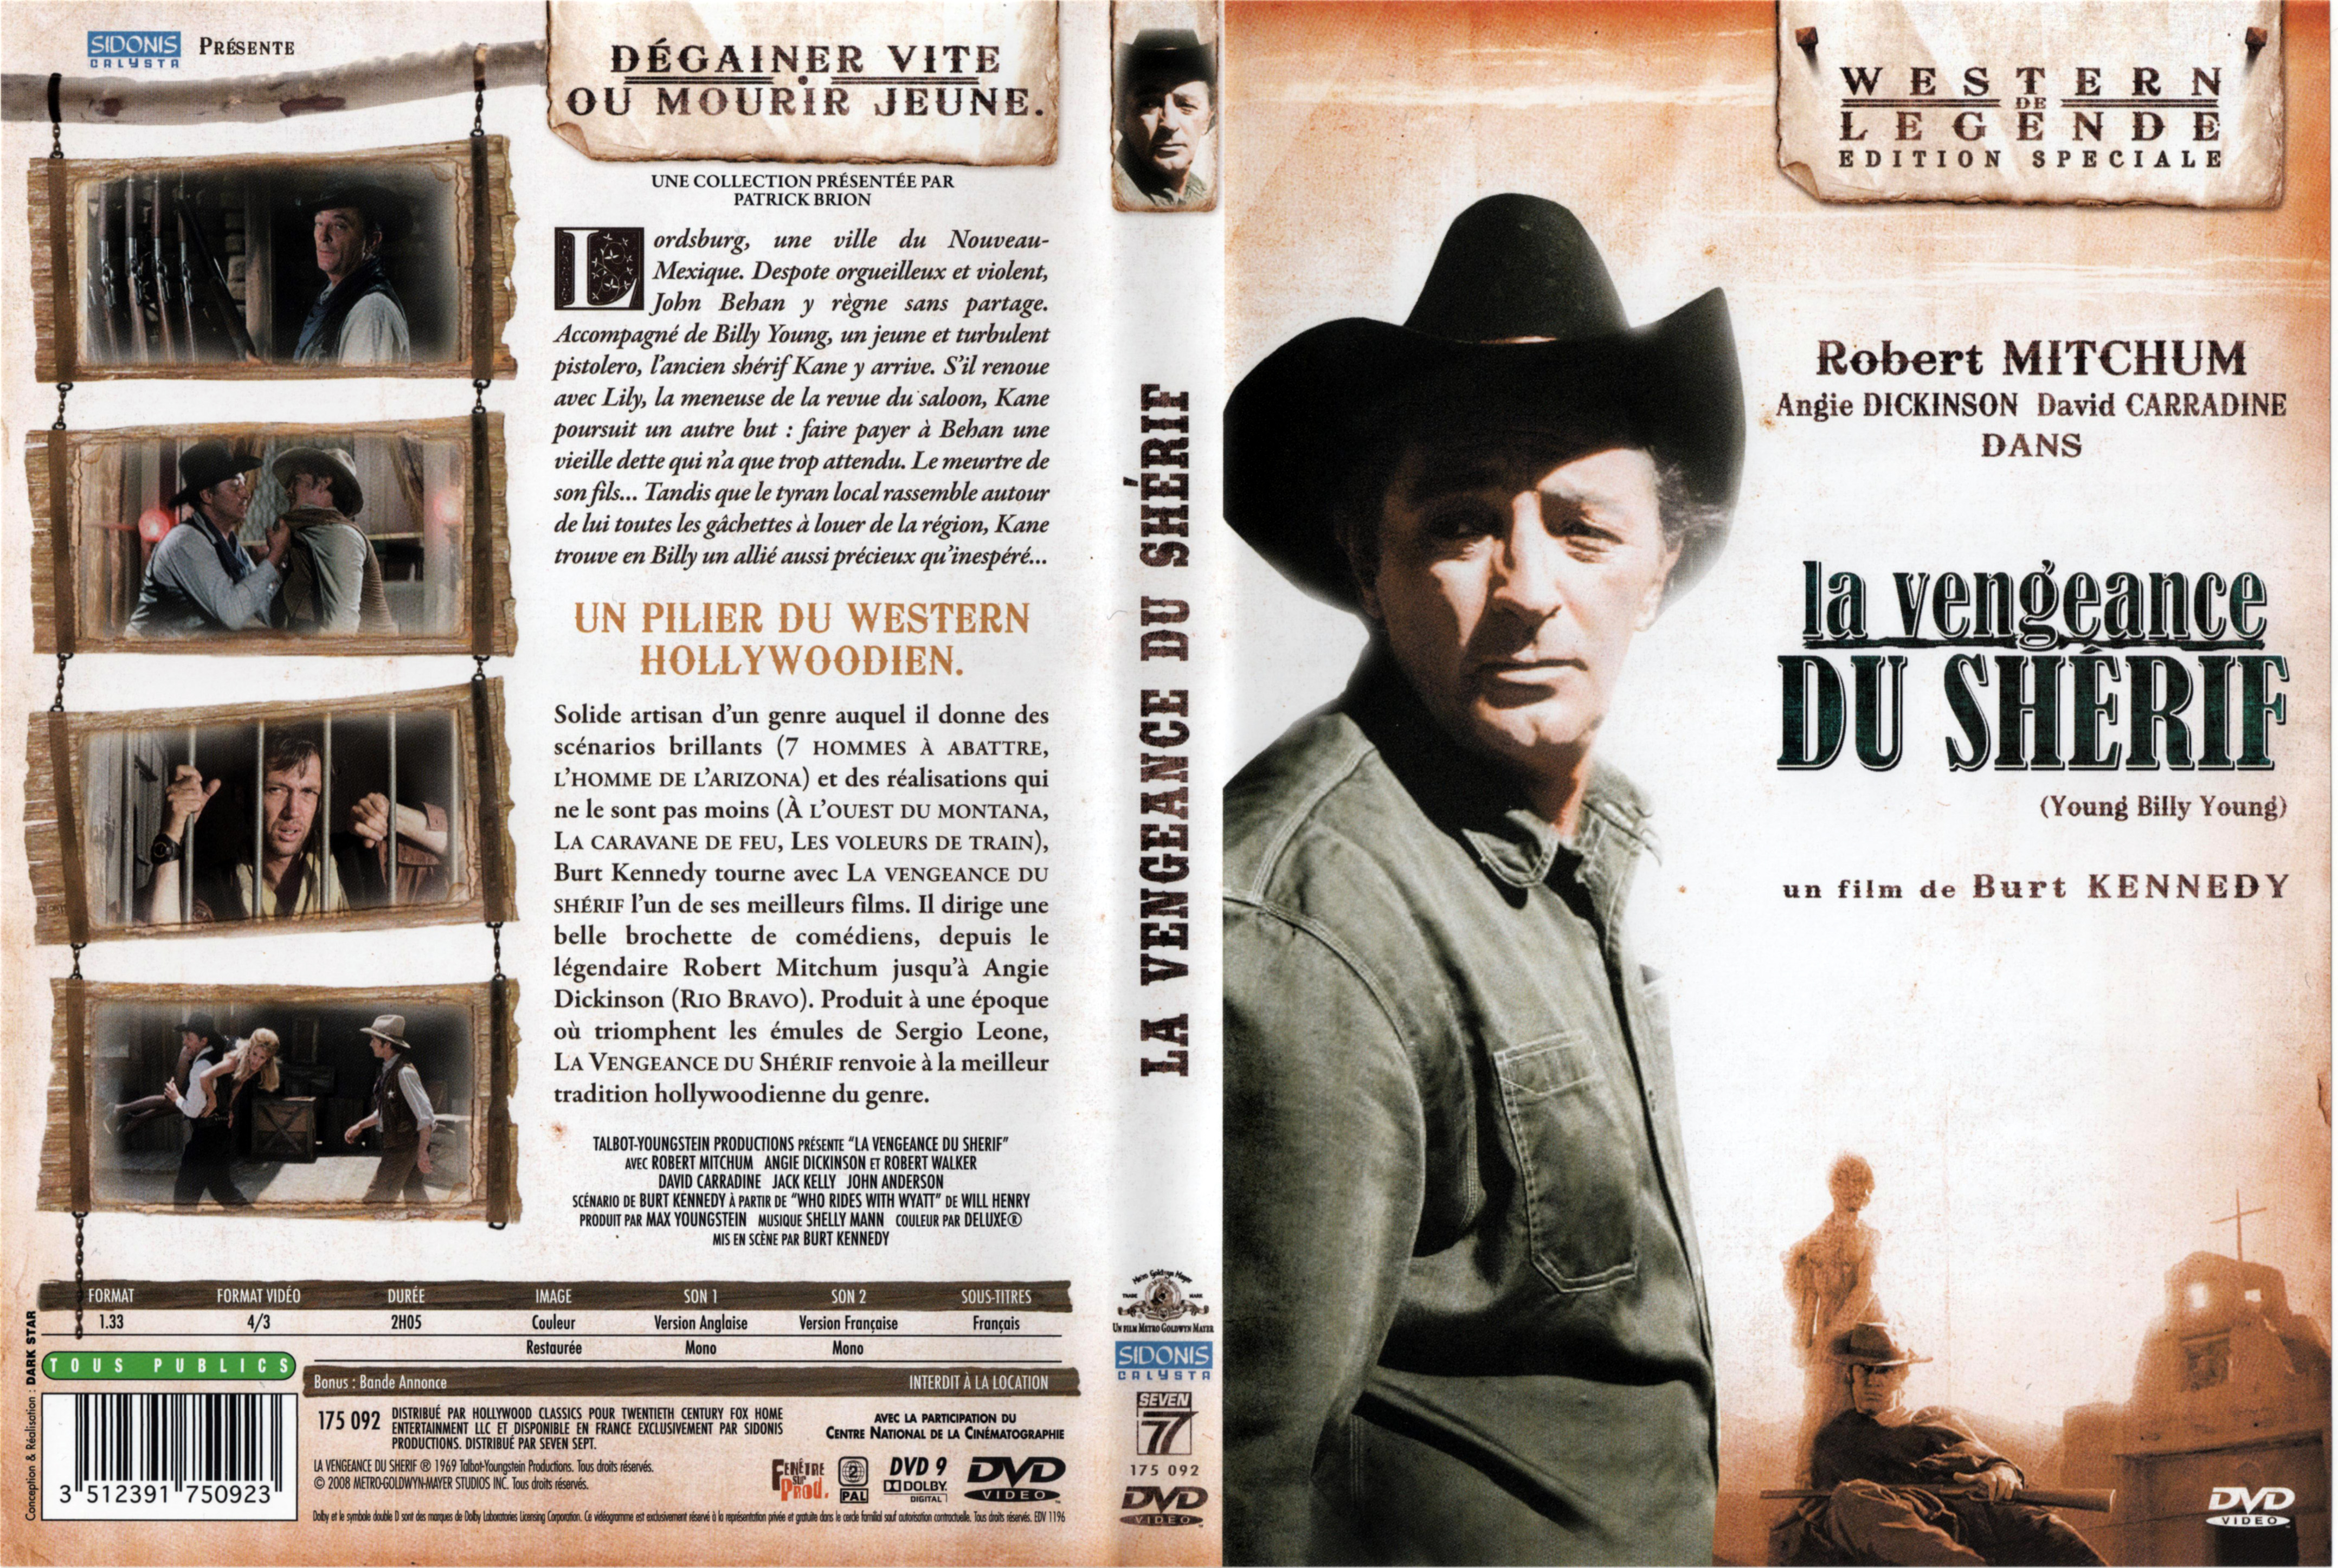 Jaquette DVD La vengeance du shrif v2